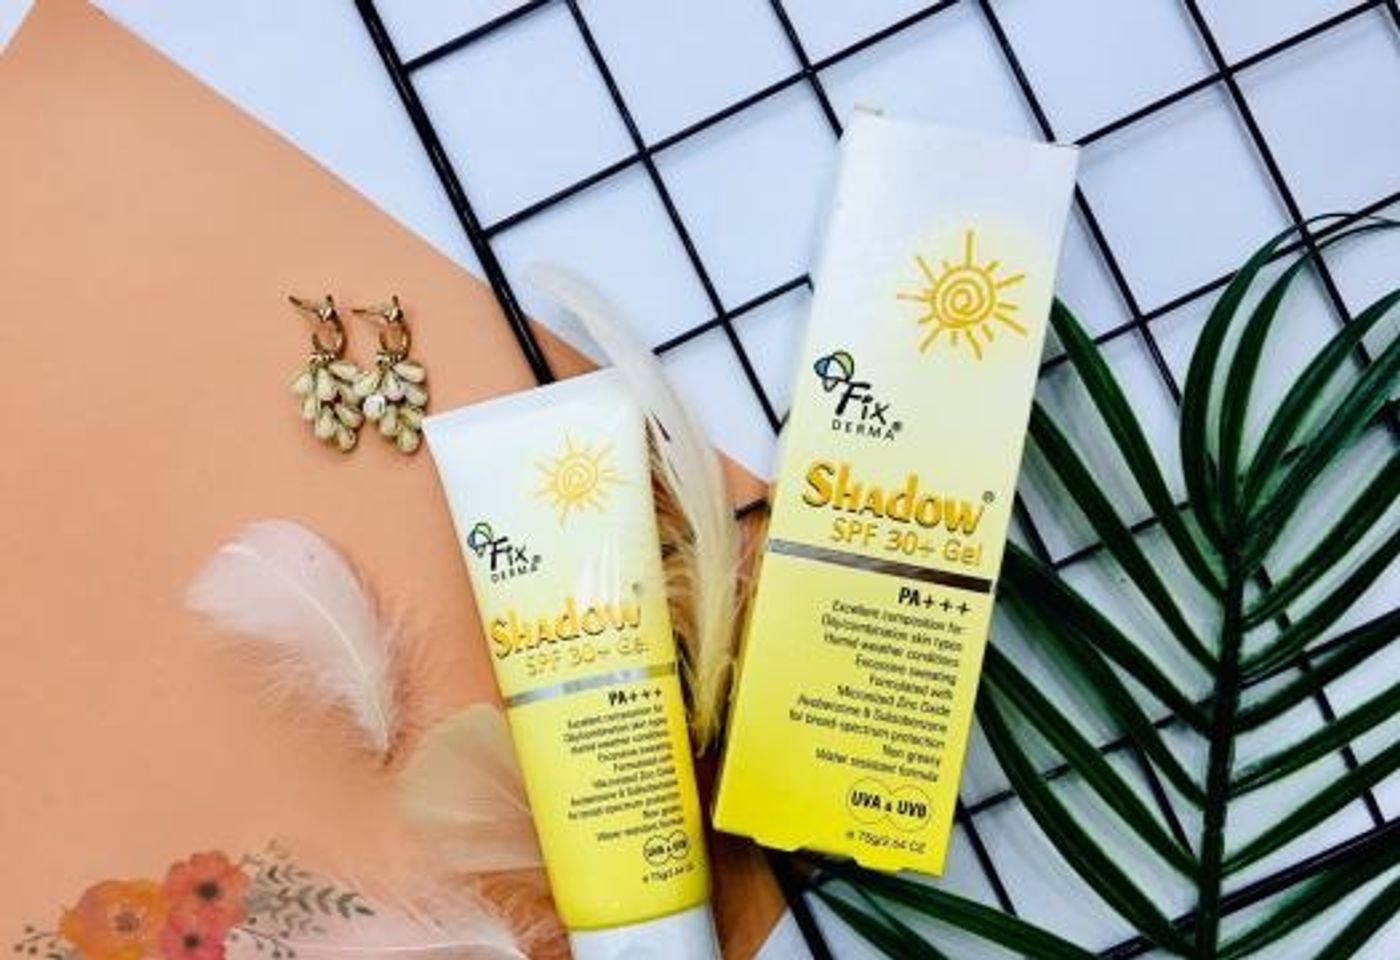 Kem chống nắng Fixderma Shadow cream SPF 50+  